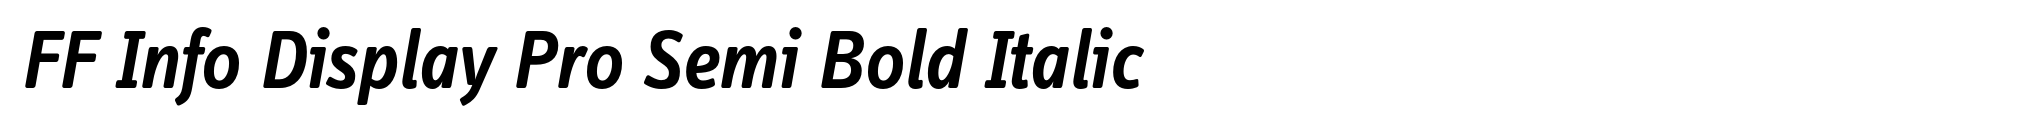 FF Info Display Pro Semi Bold Italic image